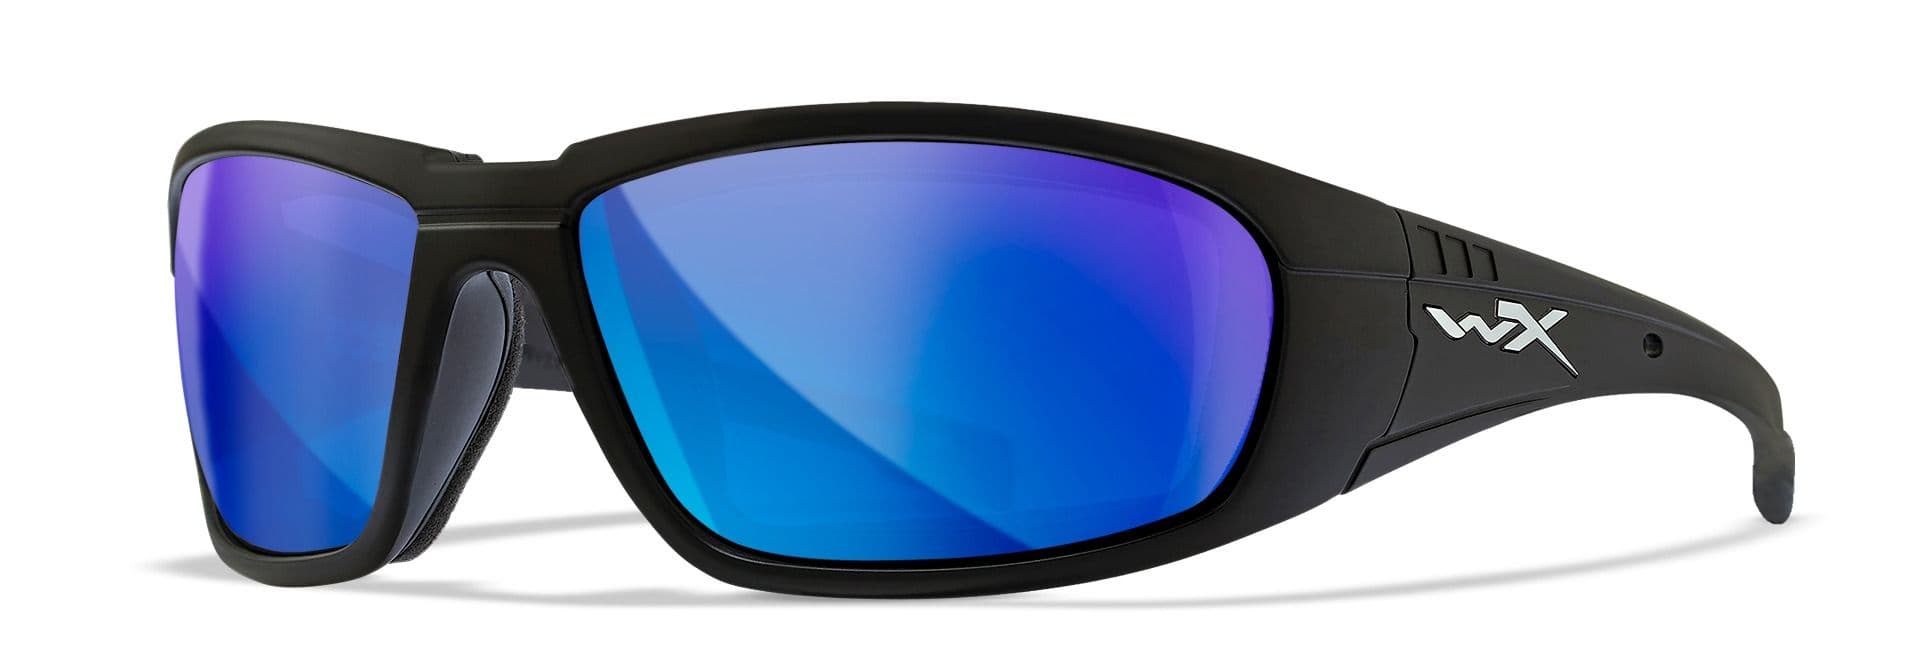 Wiley-X WX Boss Sunglasses